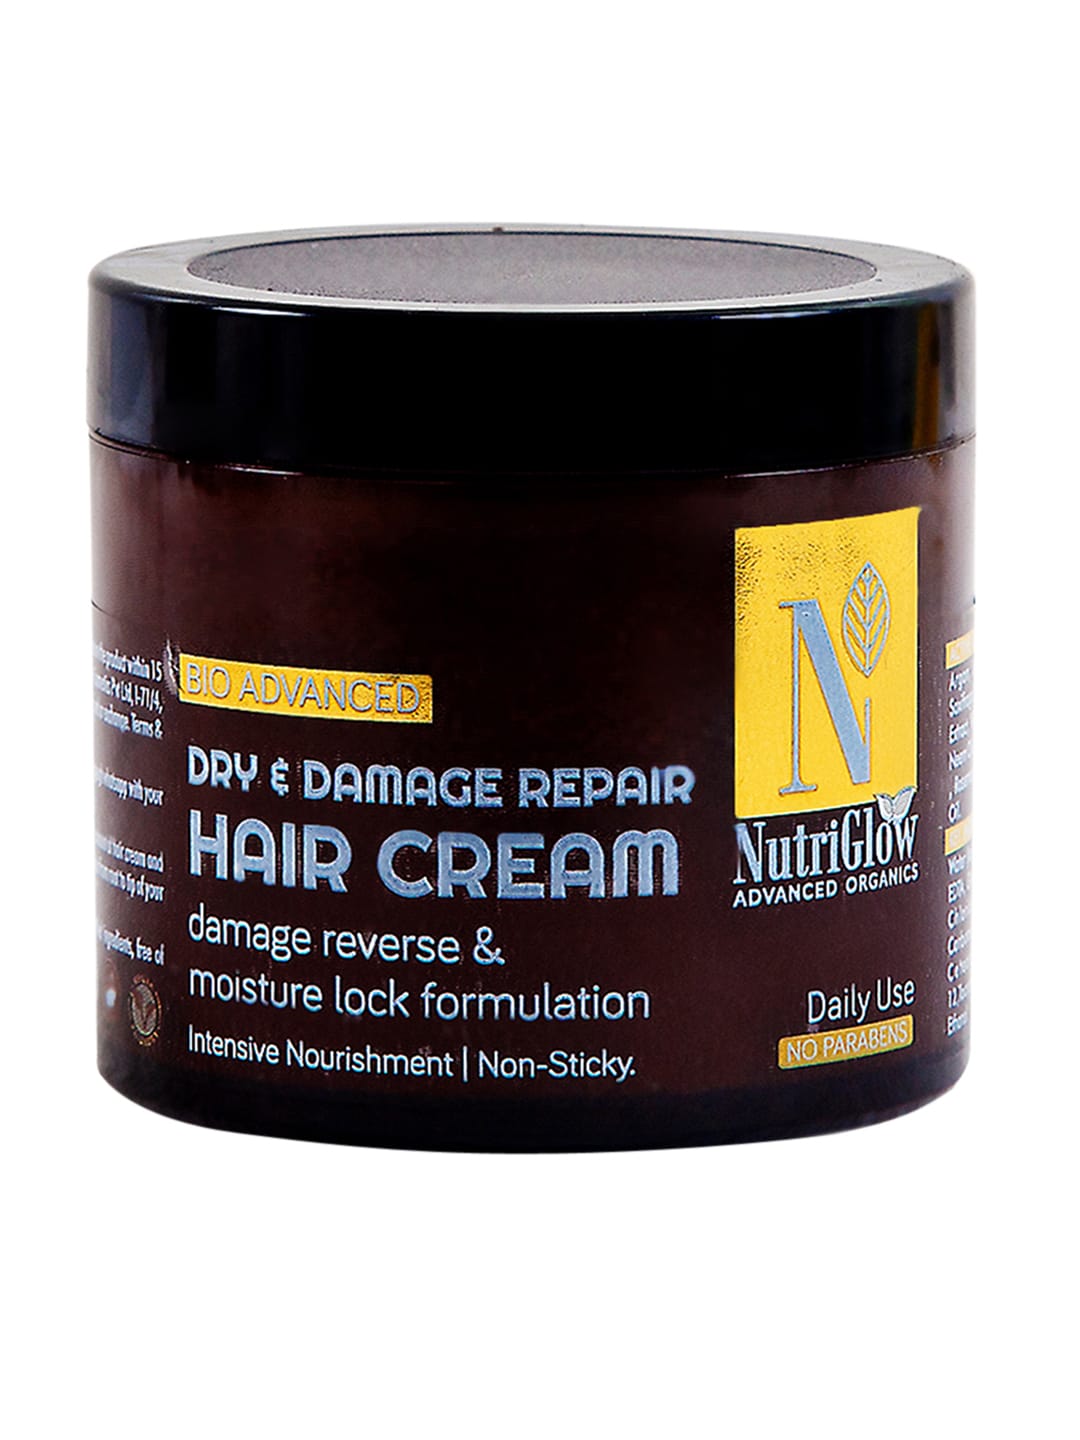 Nutriglow Advanced Organics Bio Advanced Dry & Damage Repair Hair Cream 100 gm Price in India